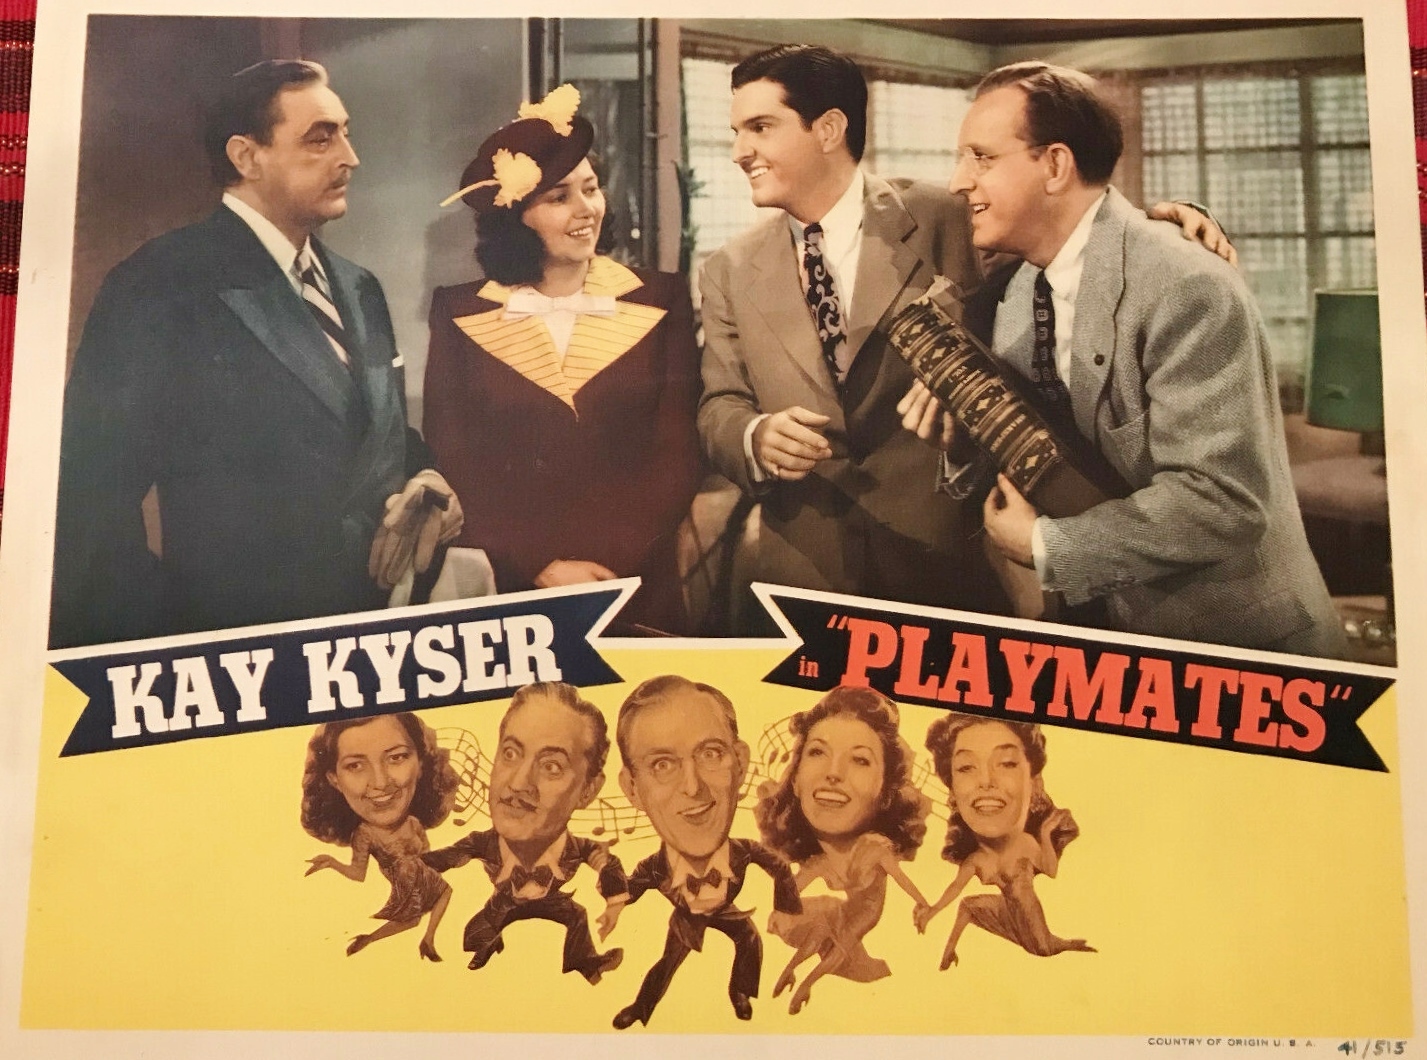 Playmates (1941) Screenshot 1